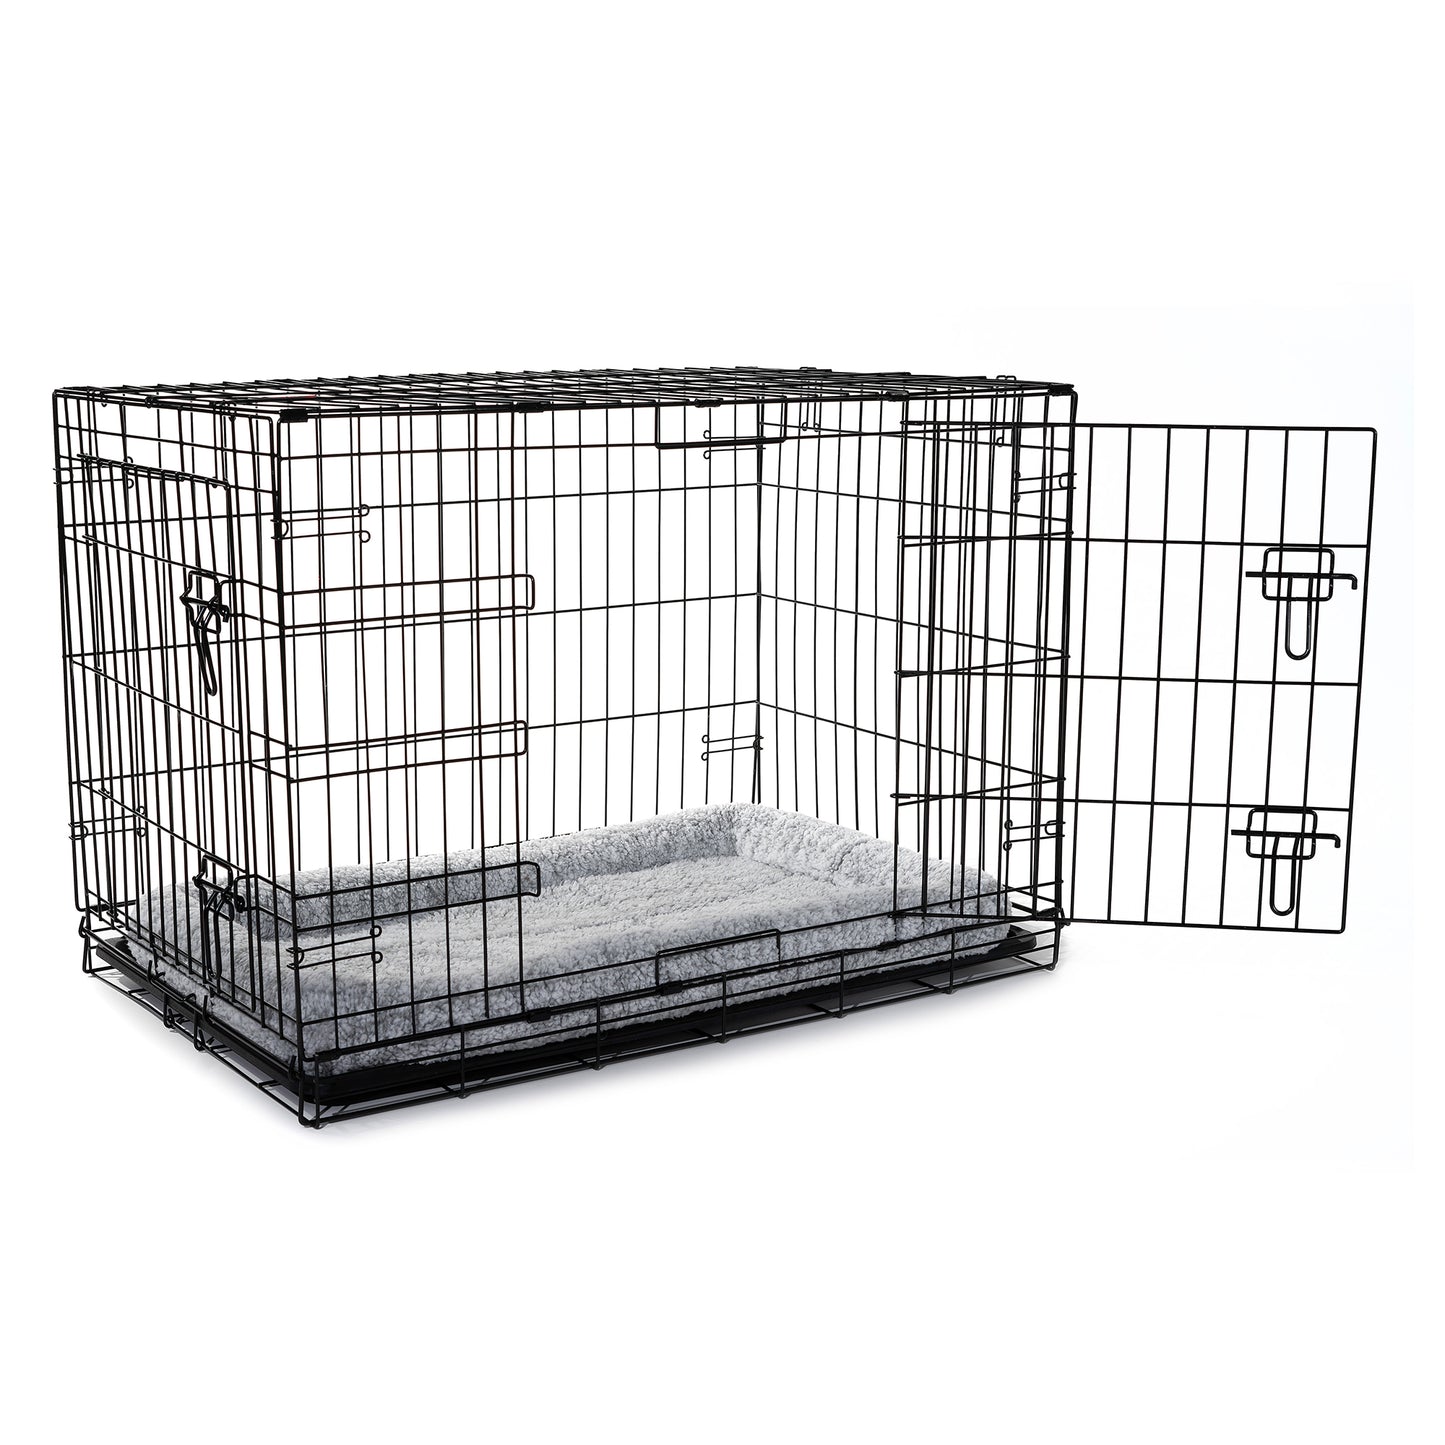 Bolster Dog Bed Crate Mat | Dog Crate Bed - Nova